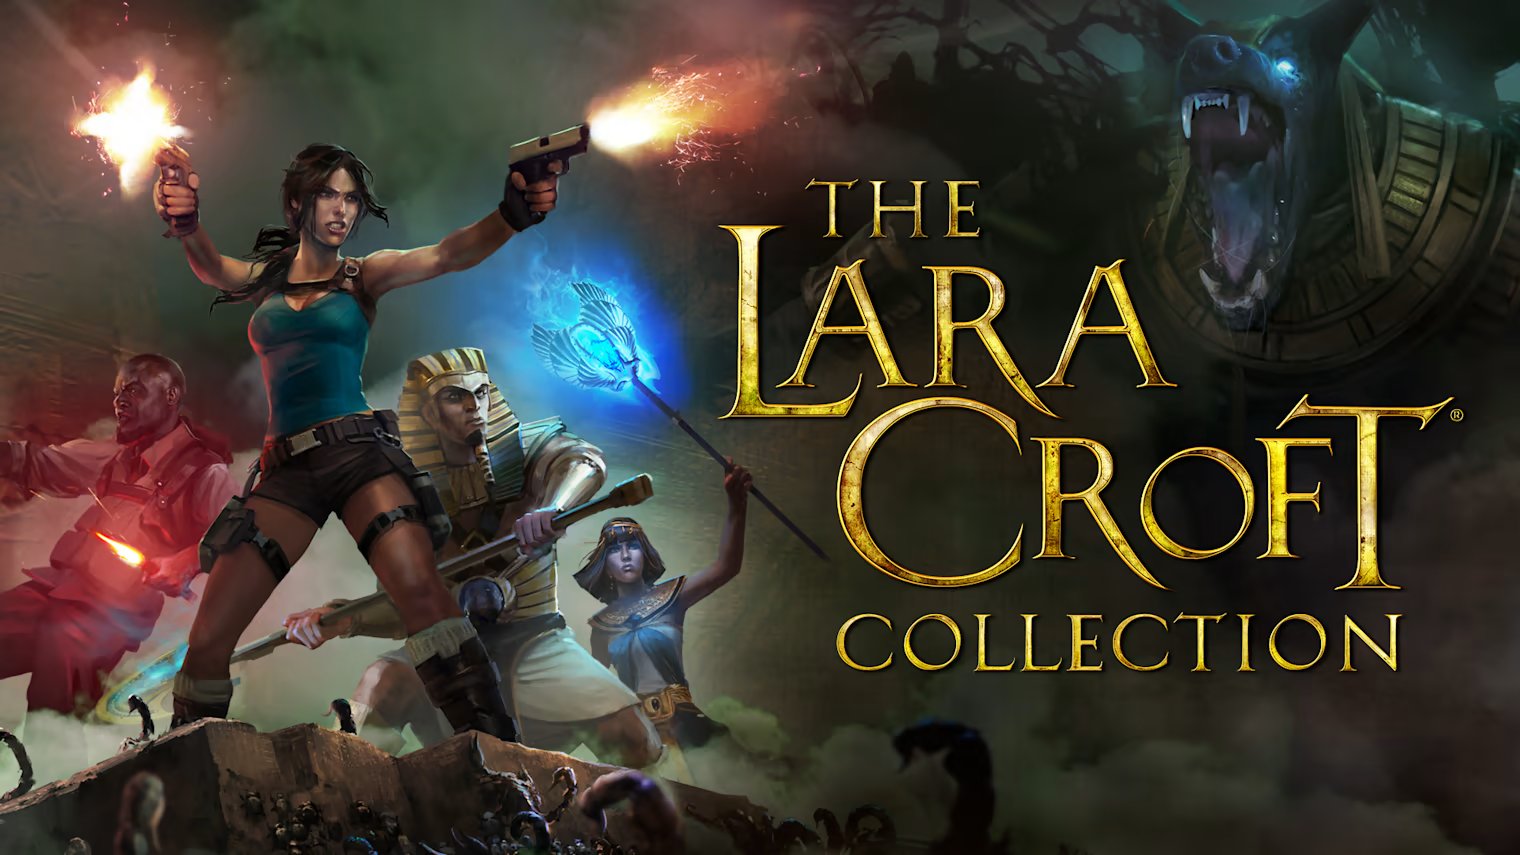 Imagen promocional de "The Lara Croft Collection"